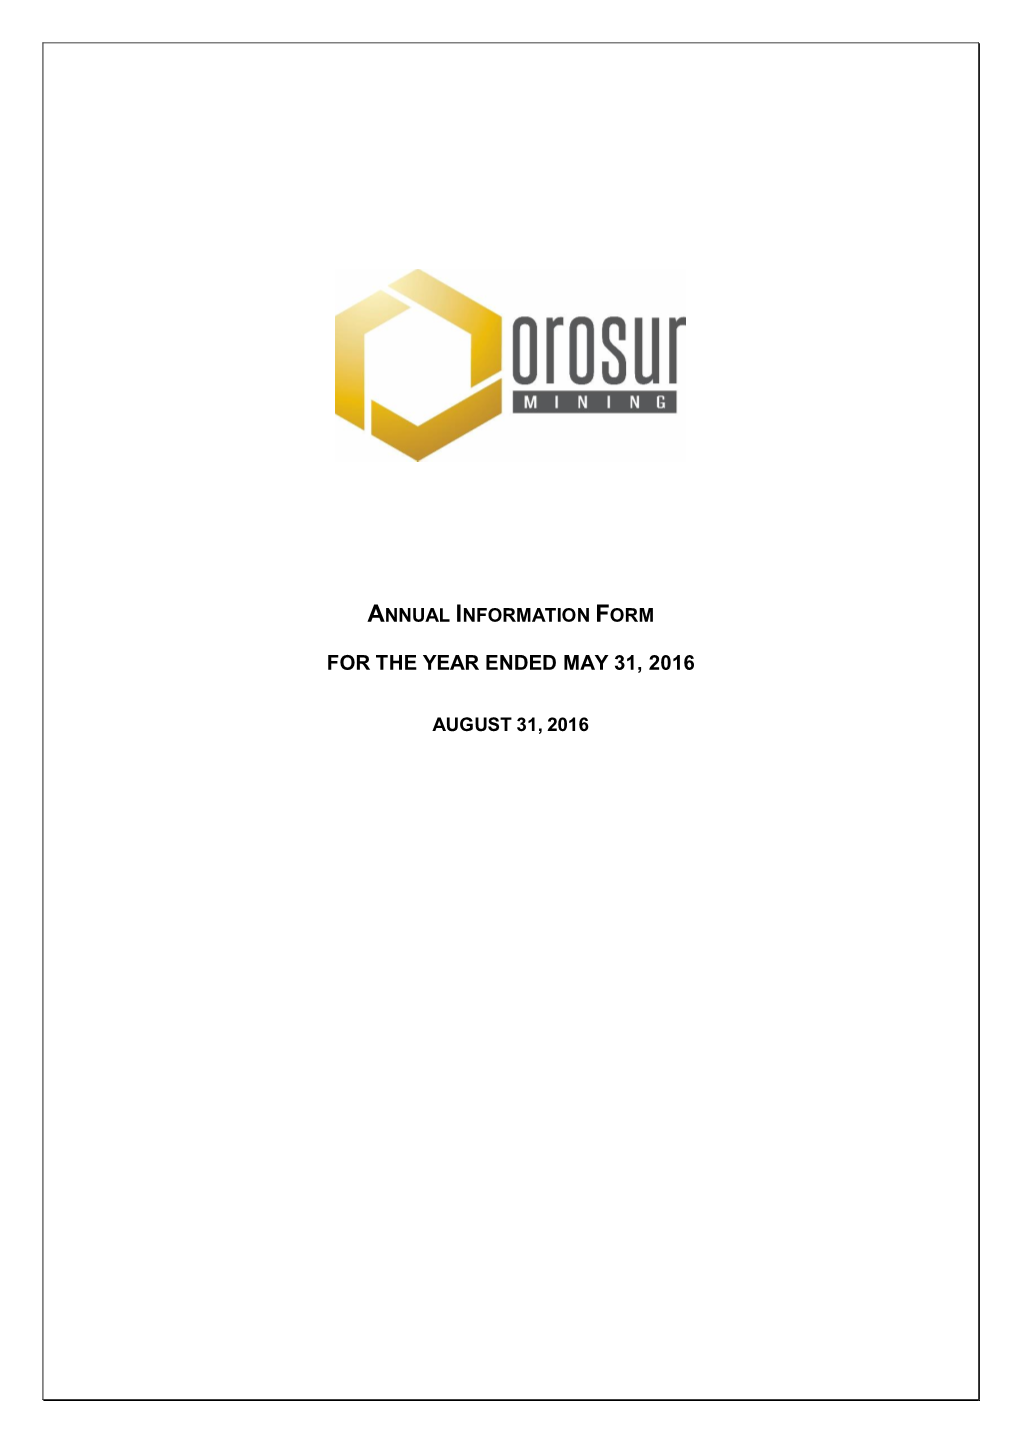 Orosur Mining Inc 2016